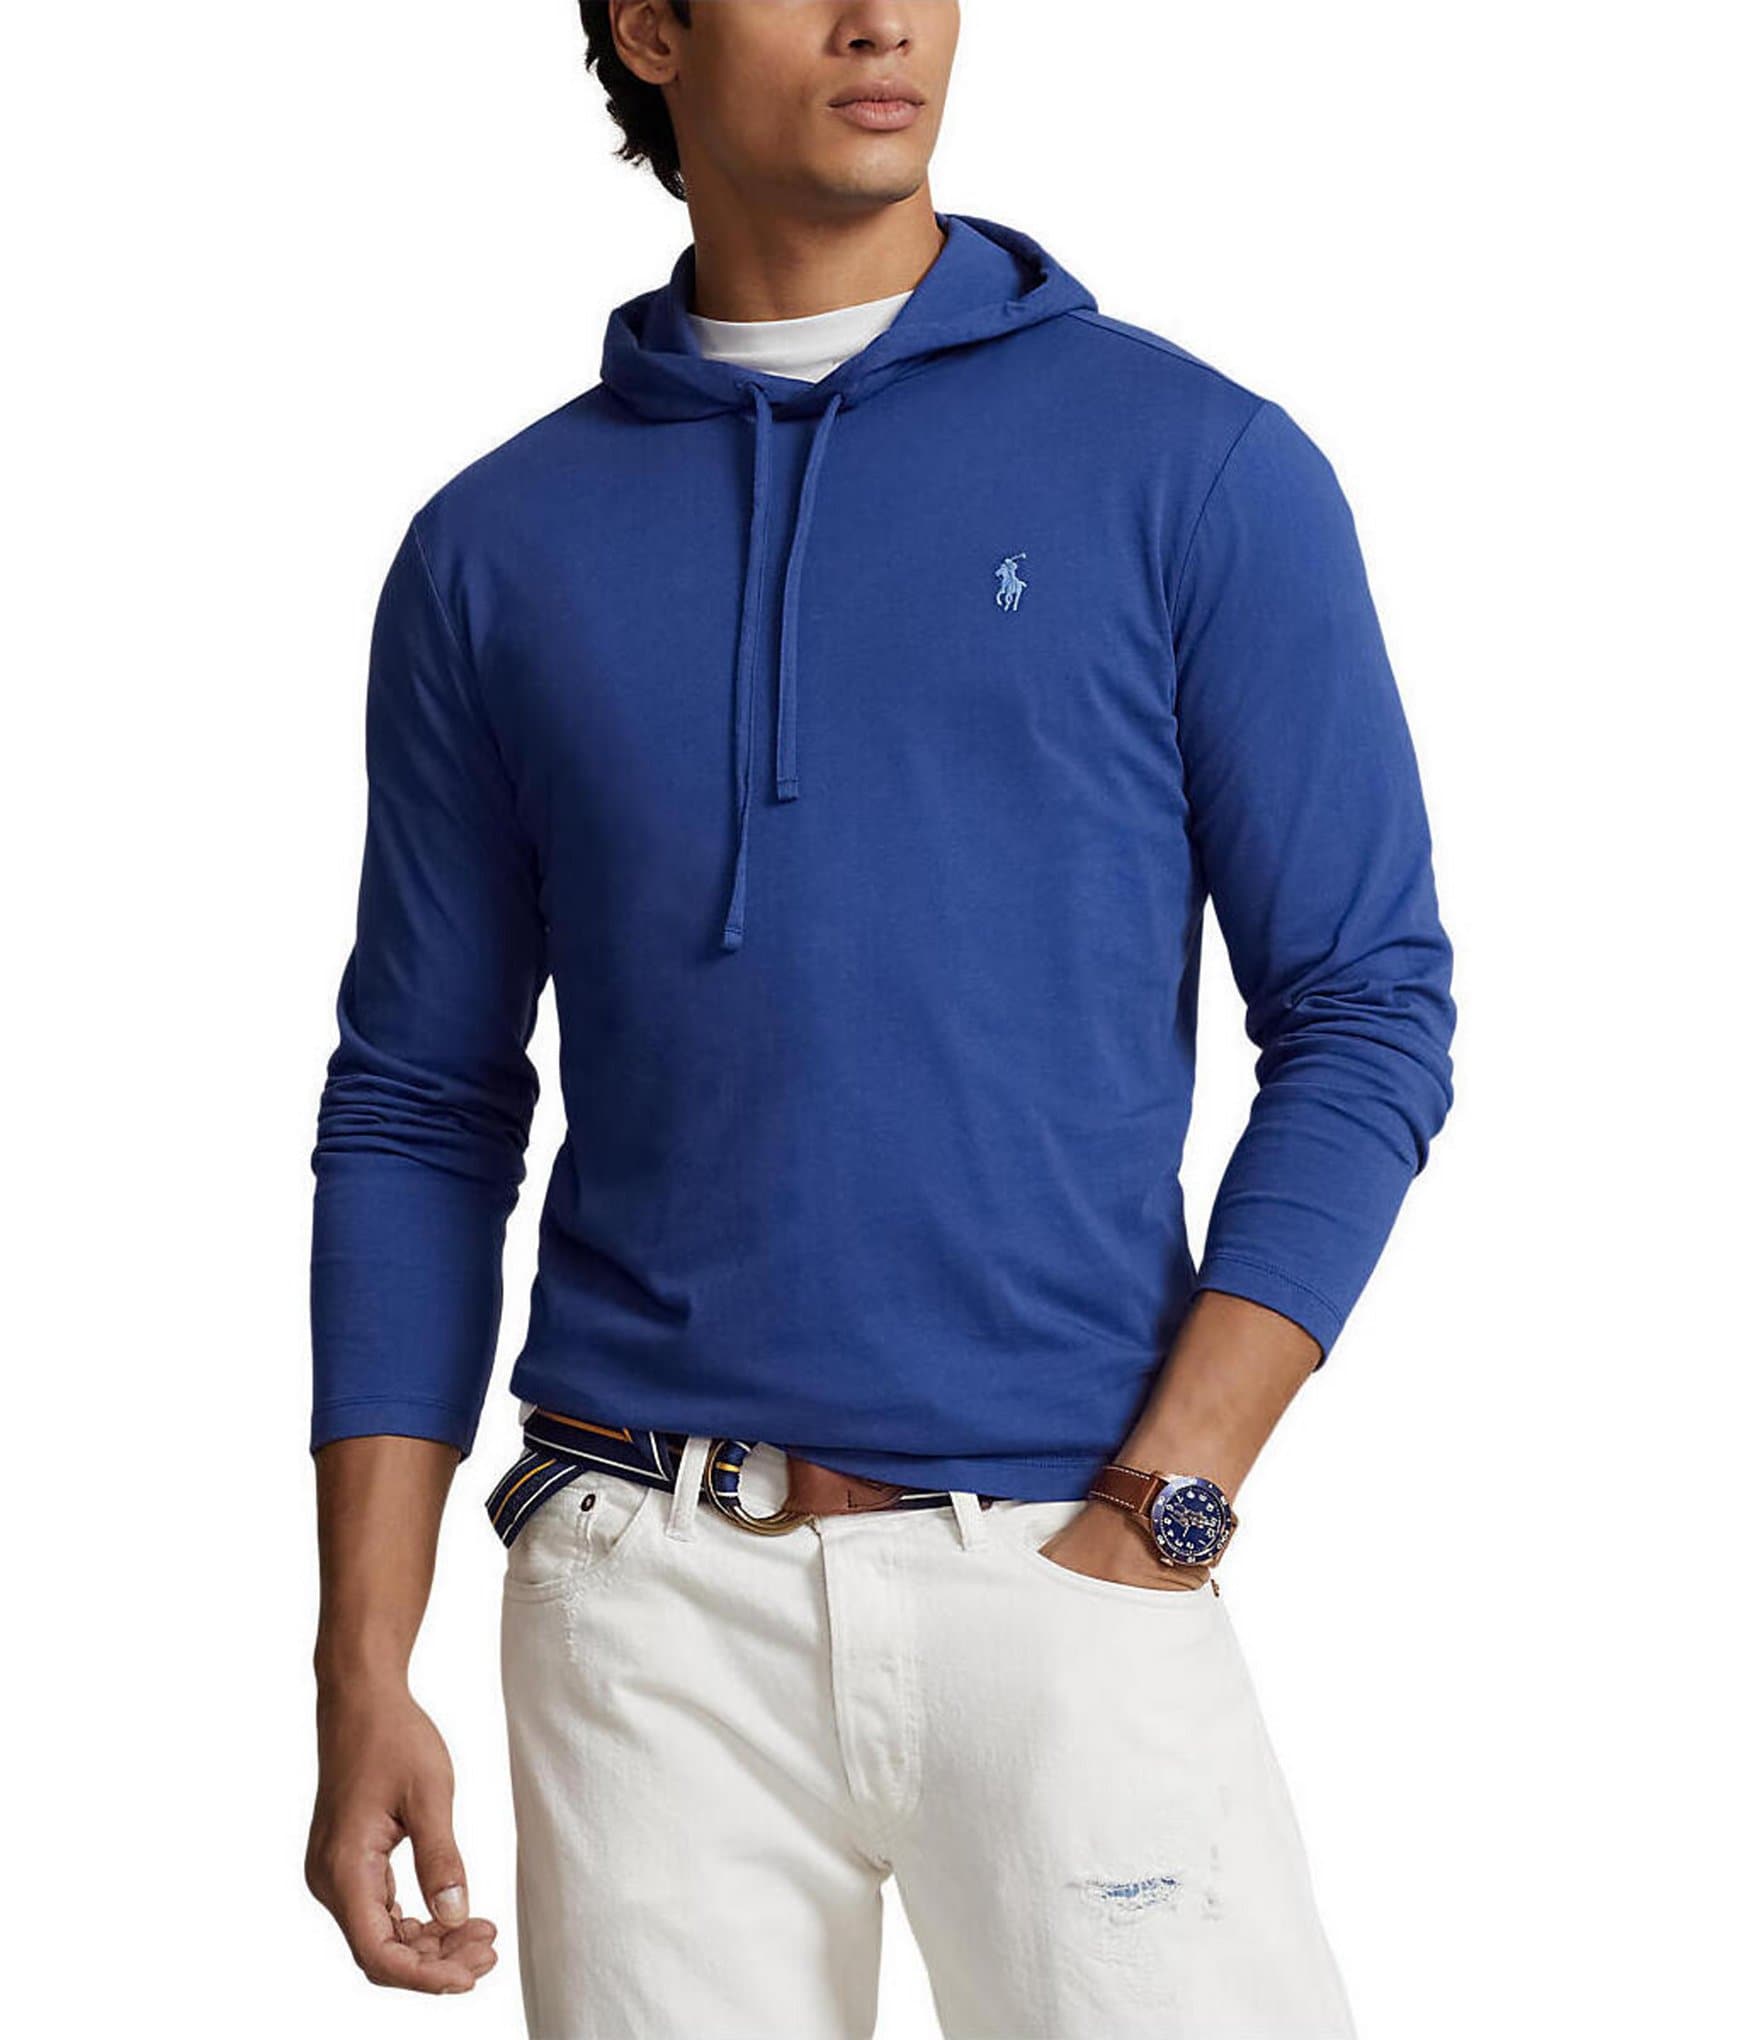 Short-sleeved double-jersey hooded sweatshirt